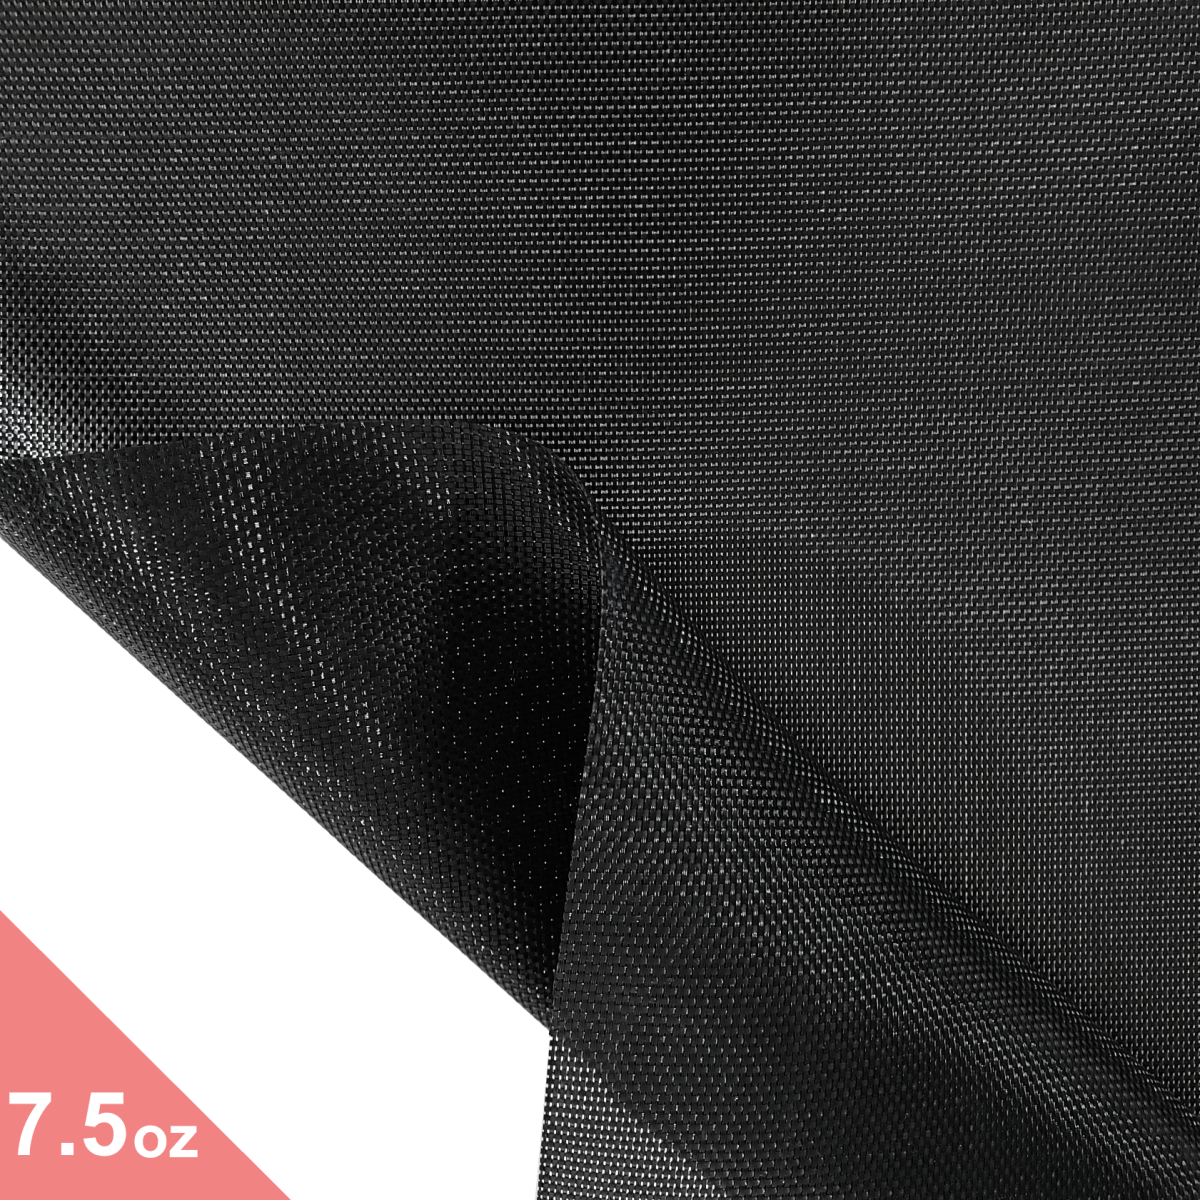 7.5oz Calendered Polypropylene Mesh Black - Fabric Price/ft.